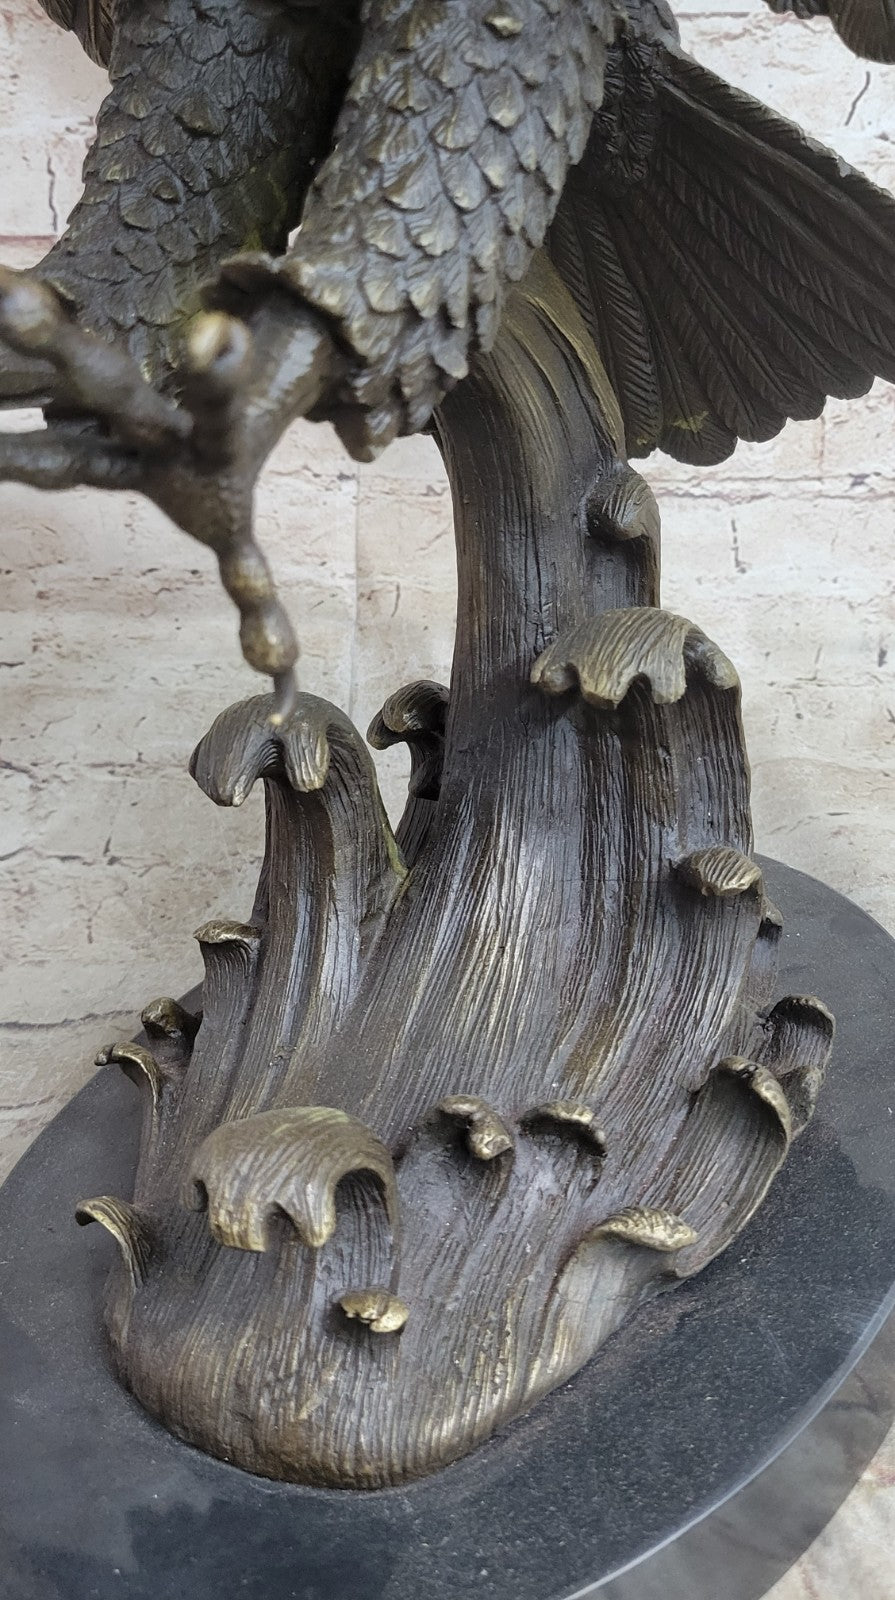 HAWK AMERICAN EAGLE Handcrafted Original Art Bronze Sculpture Statue Figurine NR